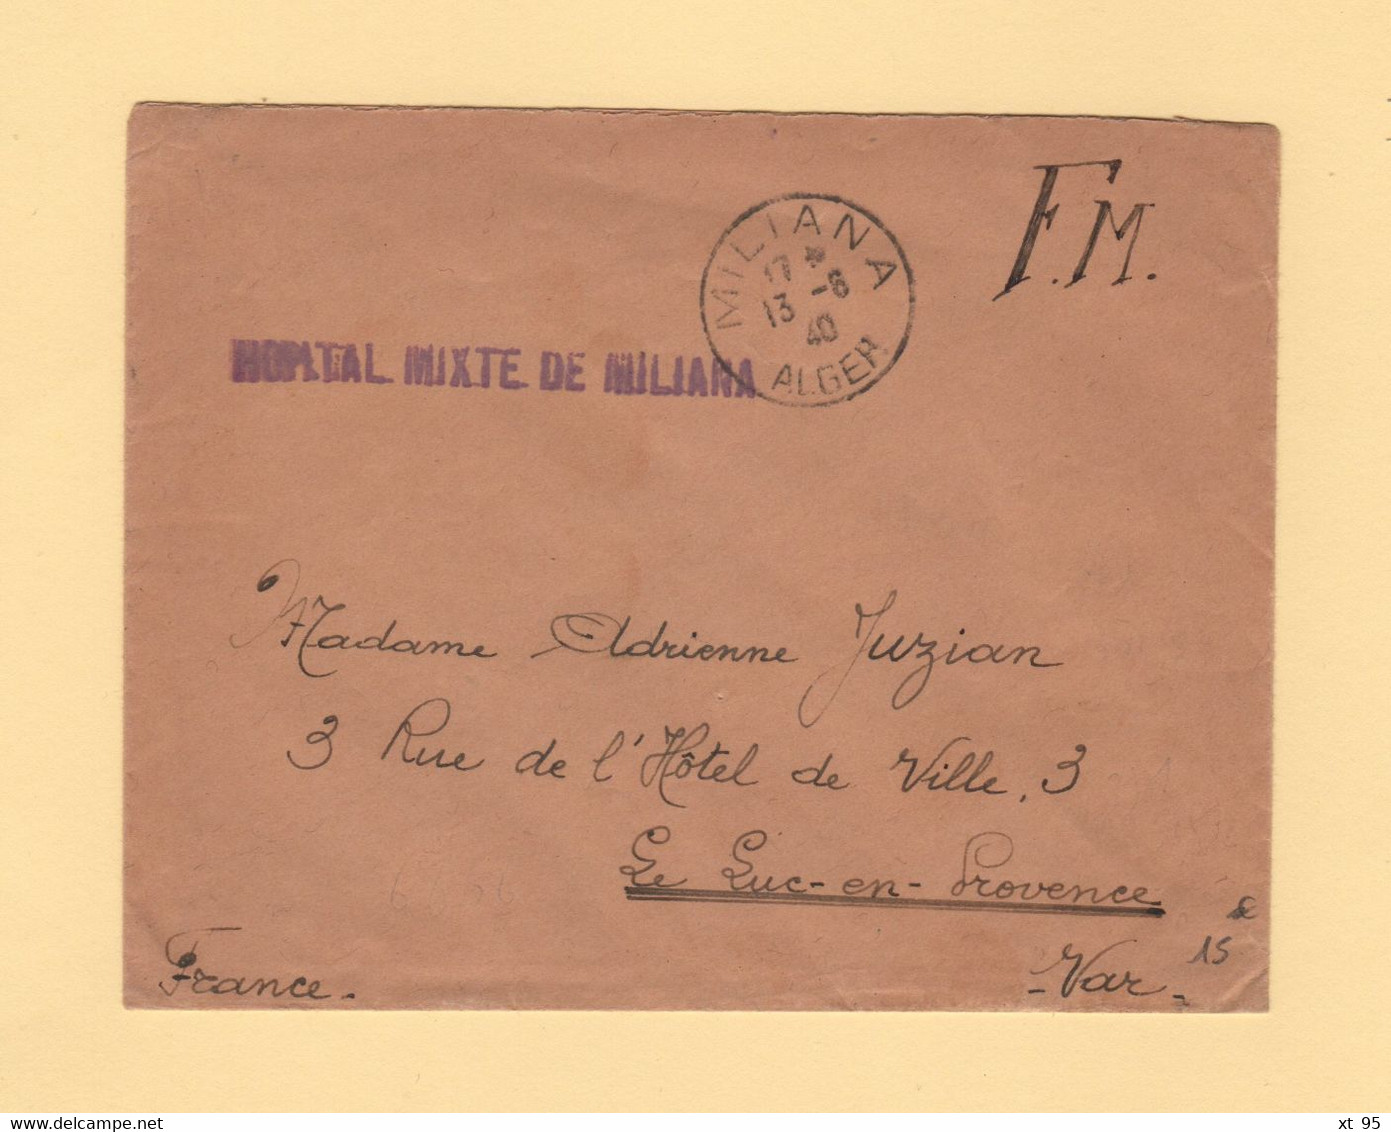 Hopital Mixte De Miliana - Alger - Algerie - 13-6-1940 - FM - 2. Weltkrieg 1939-1945